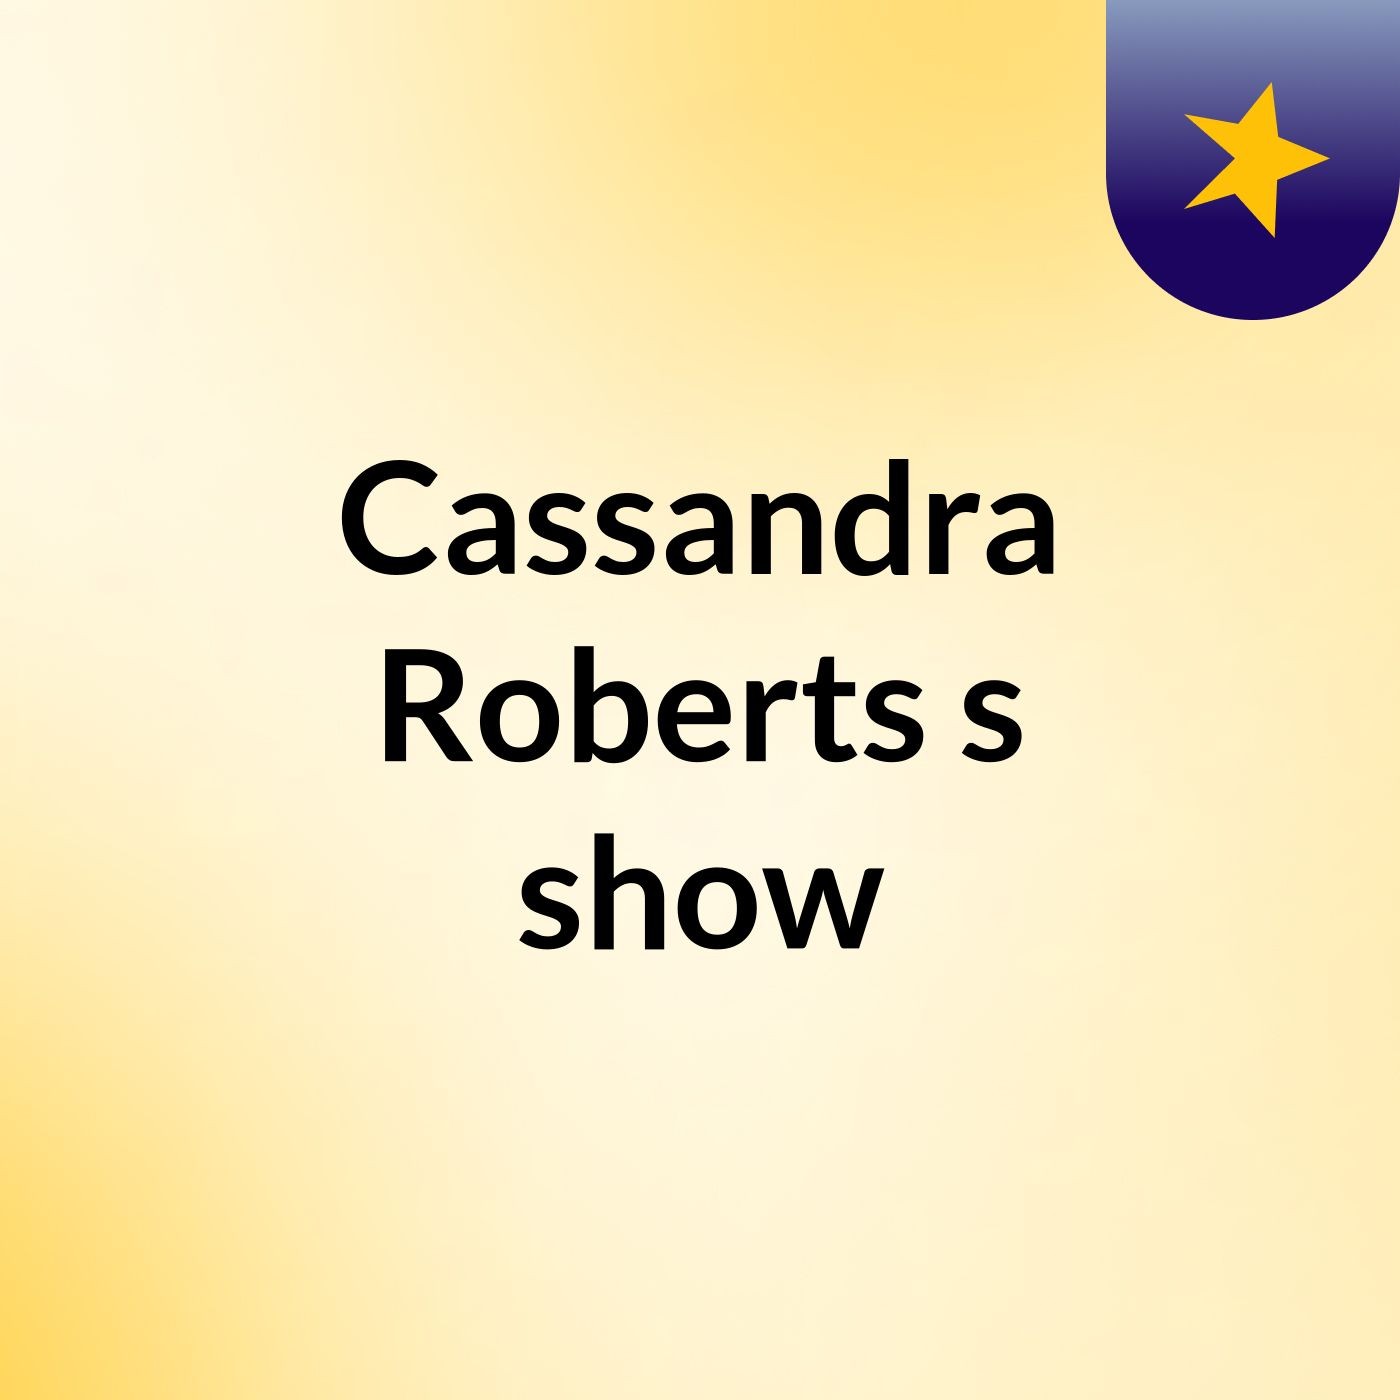 Cassandra Roberts's show